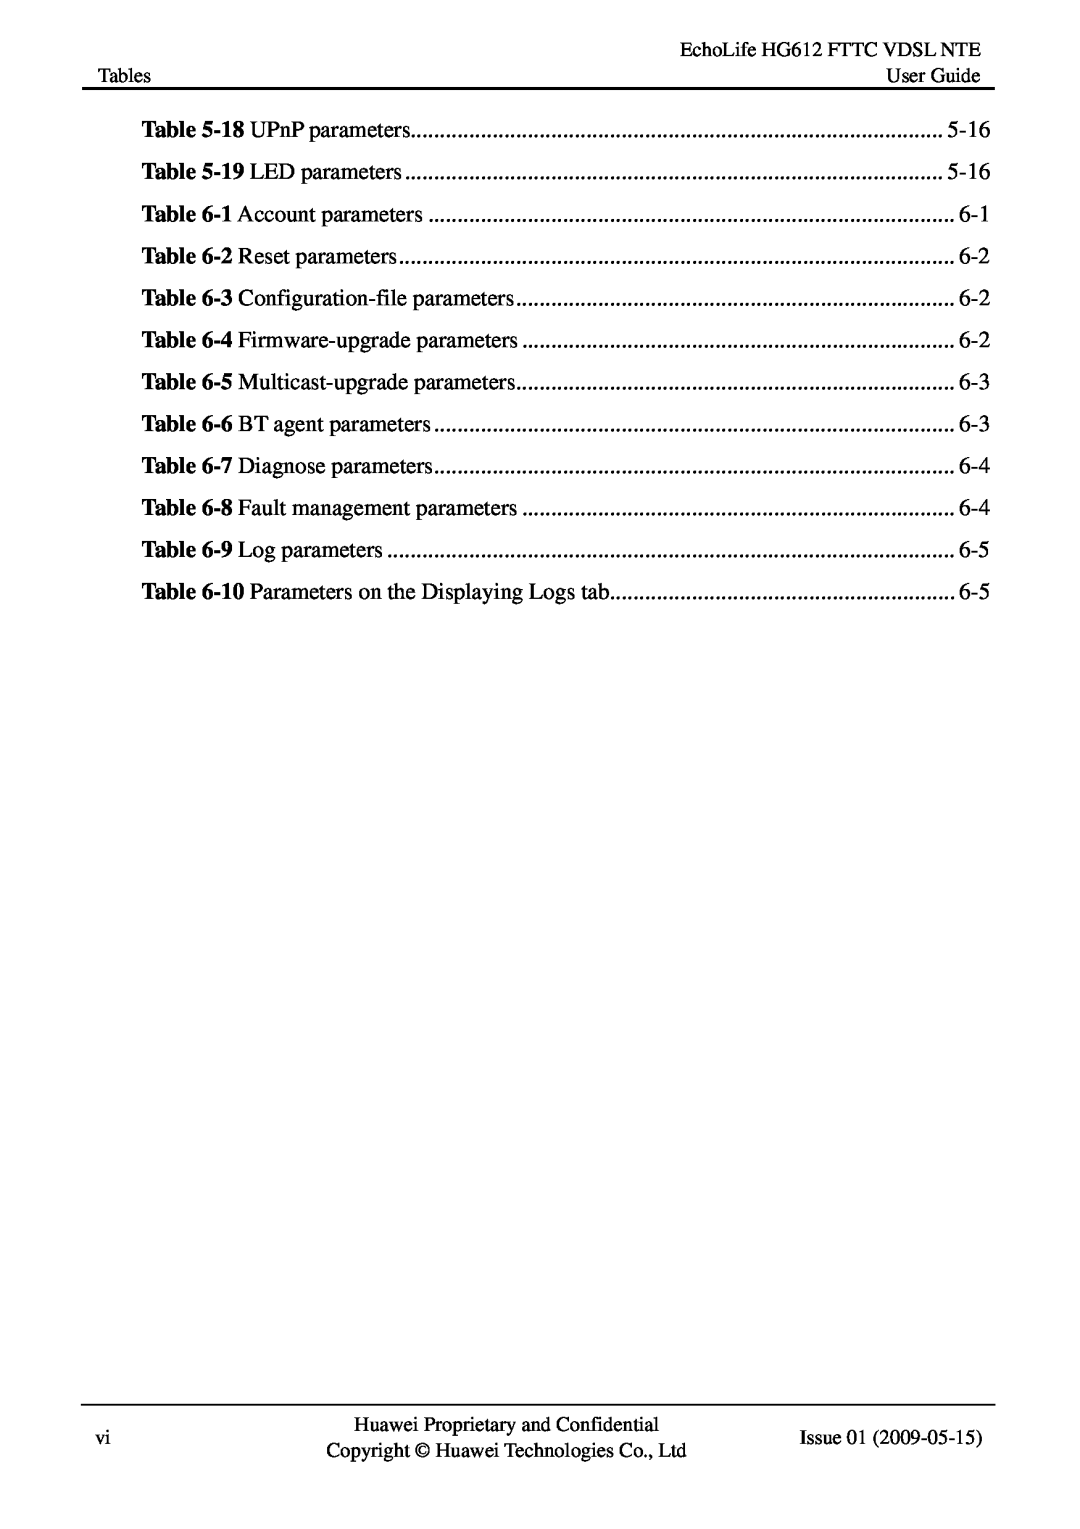 Huawei HG612FTTC VDSL NTE manual 5-16, Tables, User Guide, EchoLife HG612 FTTC VDSL NTE 